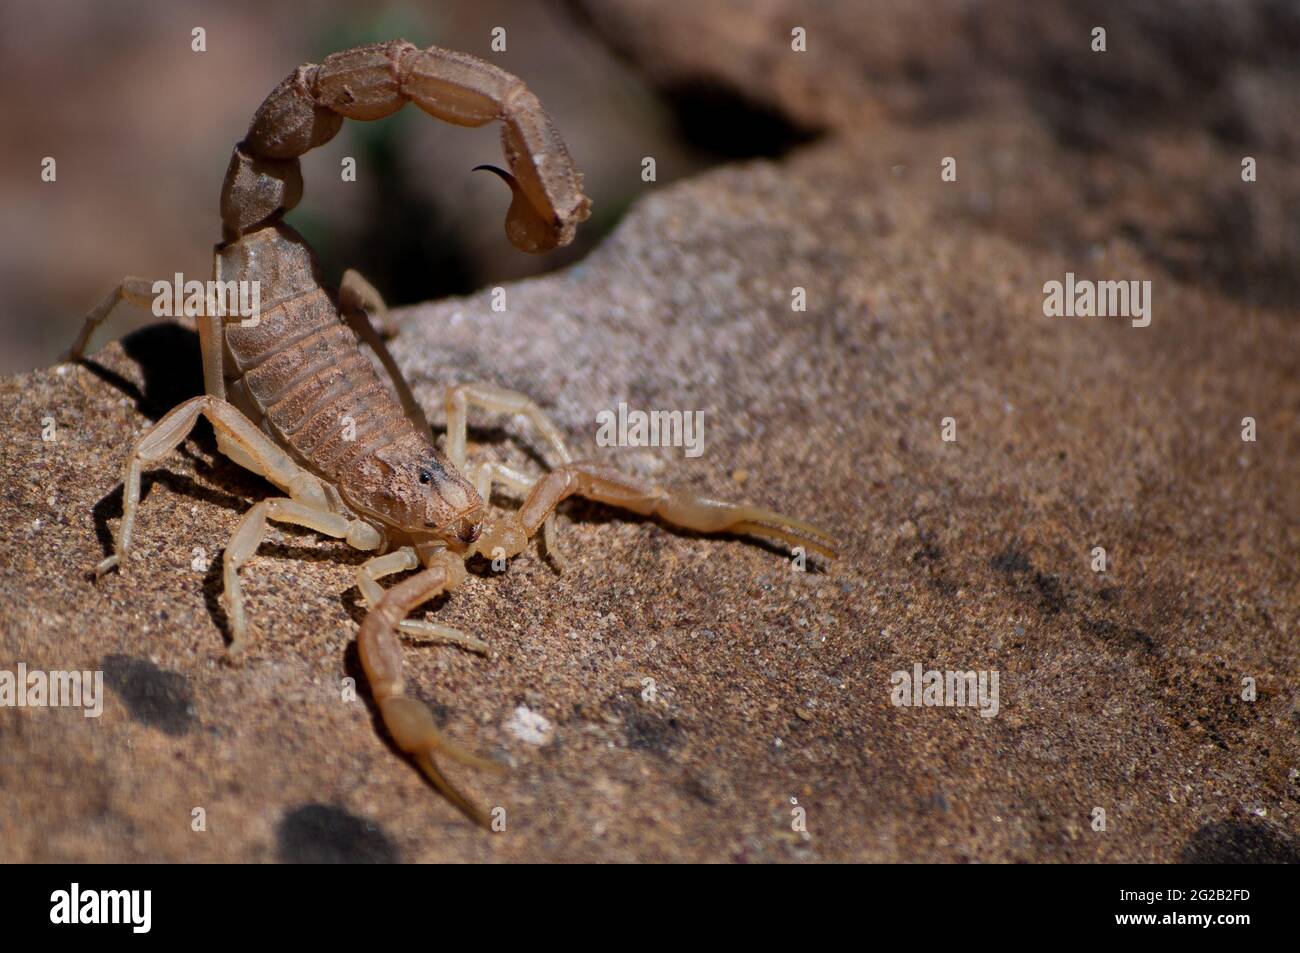 Selective focus shot of a Buthus occitanus (common yellow scorpion) Stock Photo